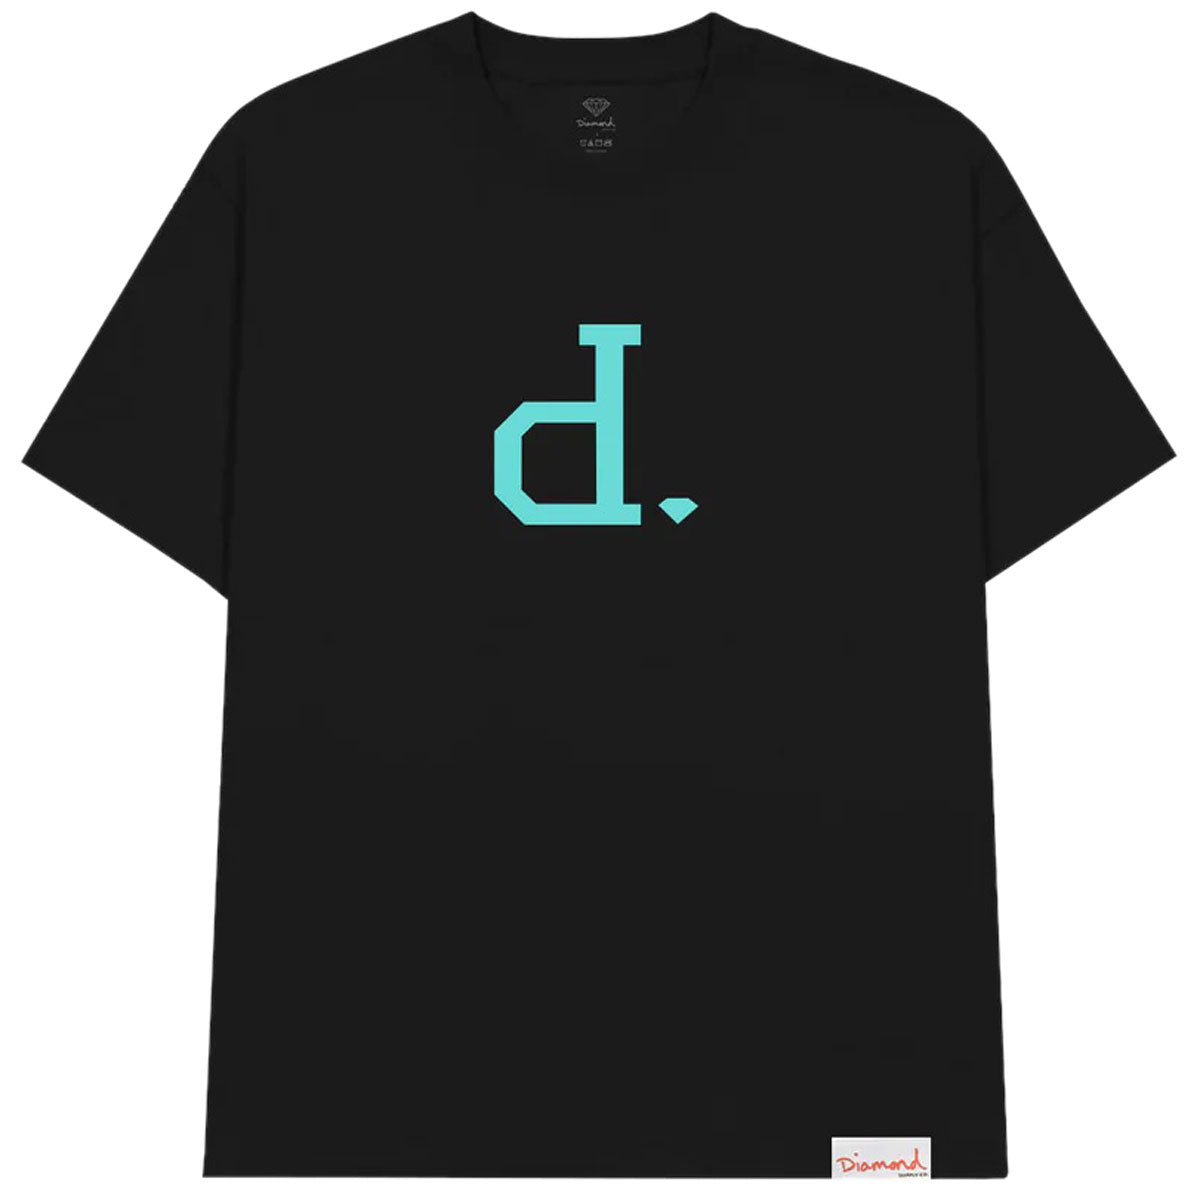 Diamond Supply Co. Unpolo Script T-Shirt - Black image 1